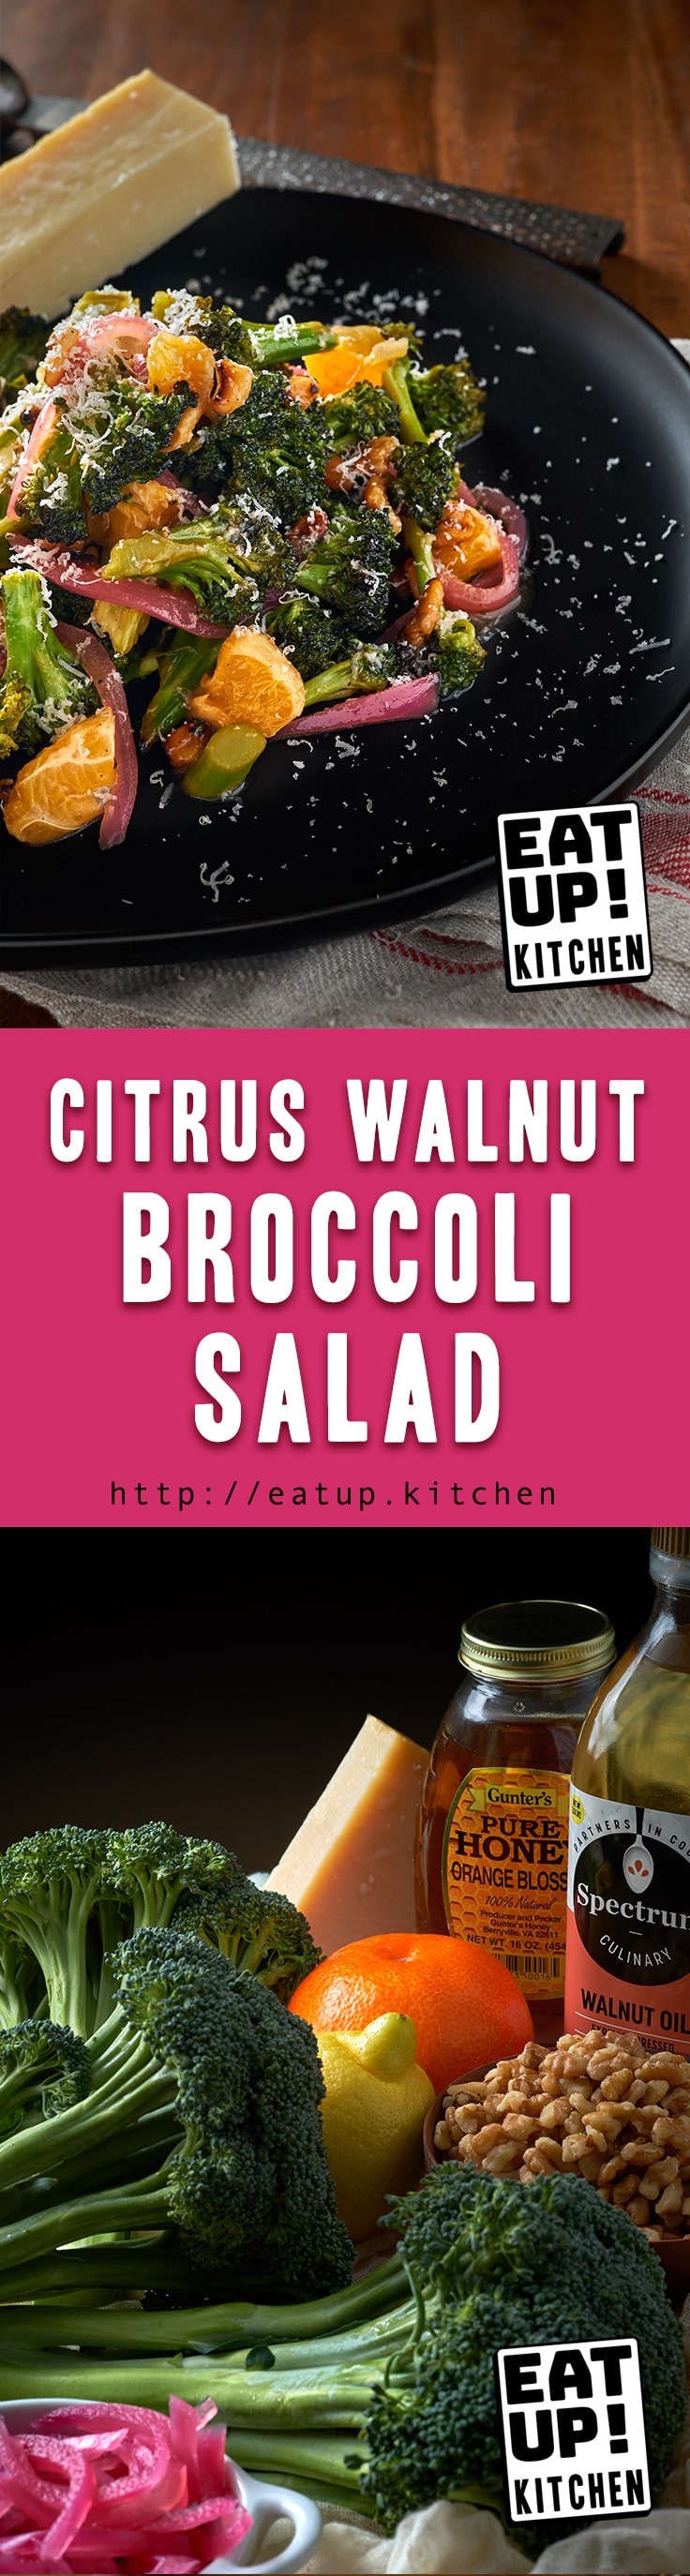 Citrus Walnut Broccoli Salad